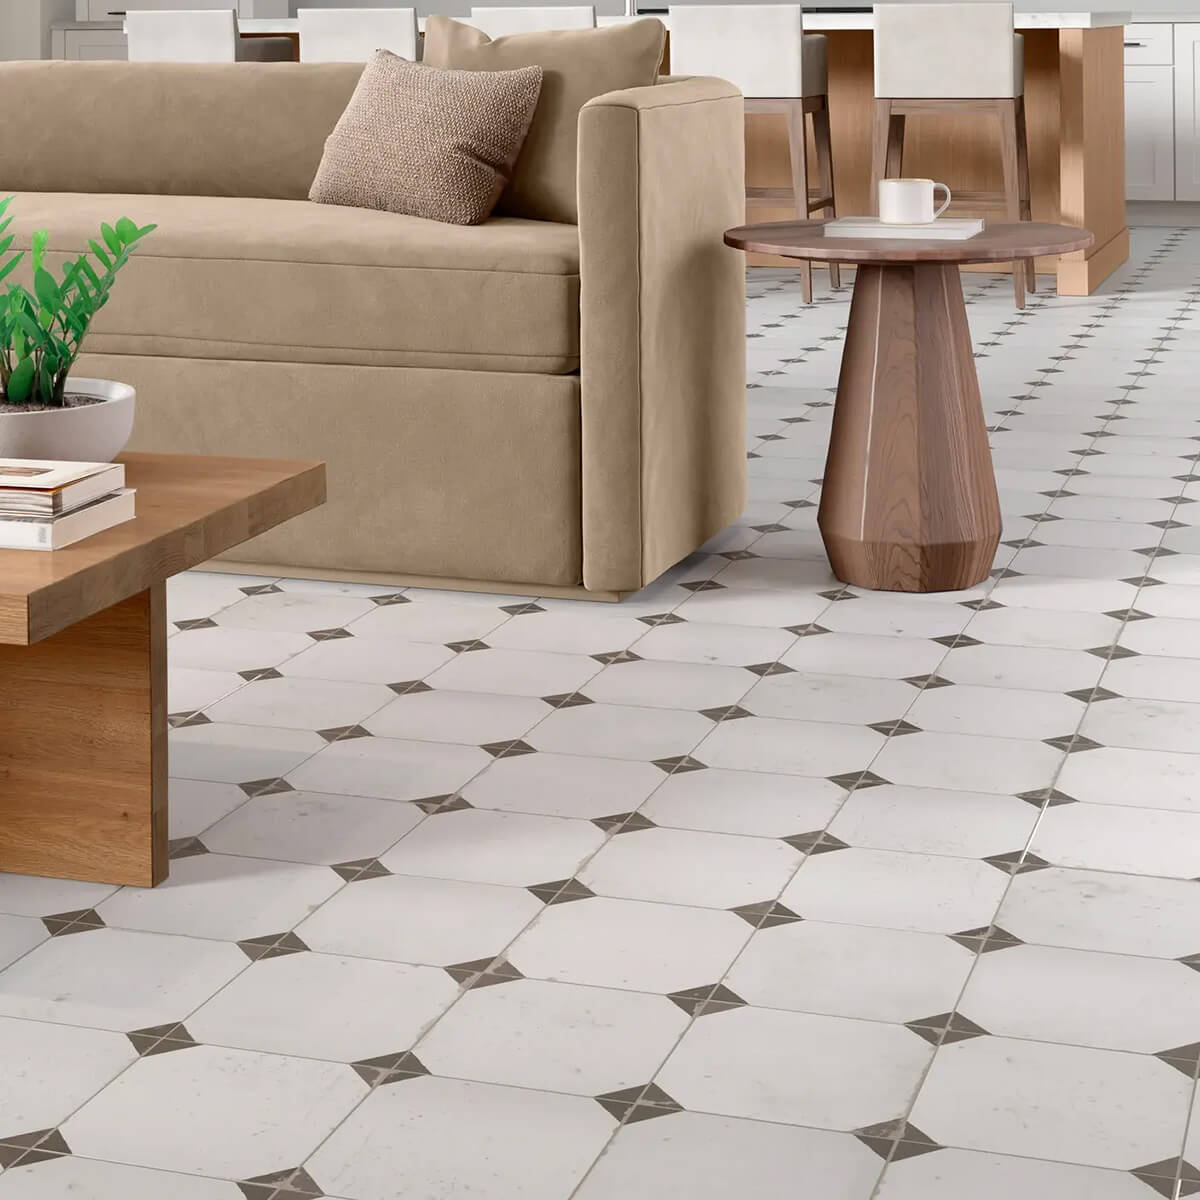 Tile flooring for living area | CarpetsPlus COLORTILE